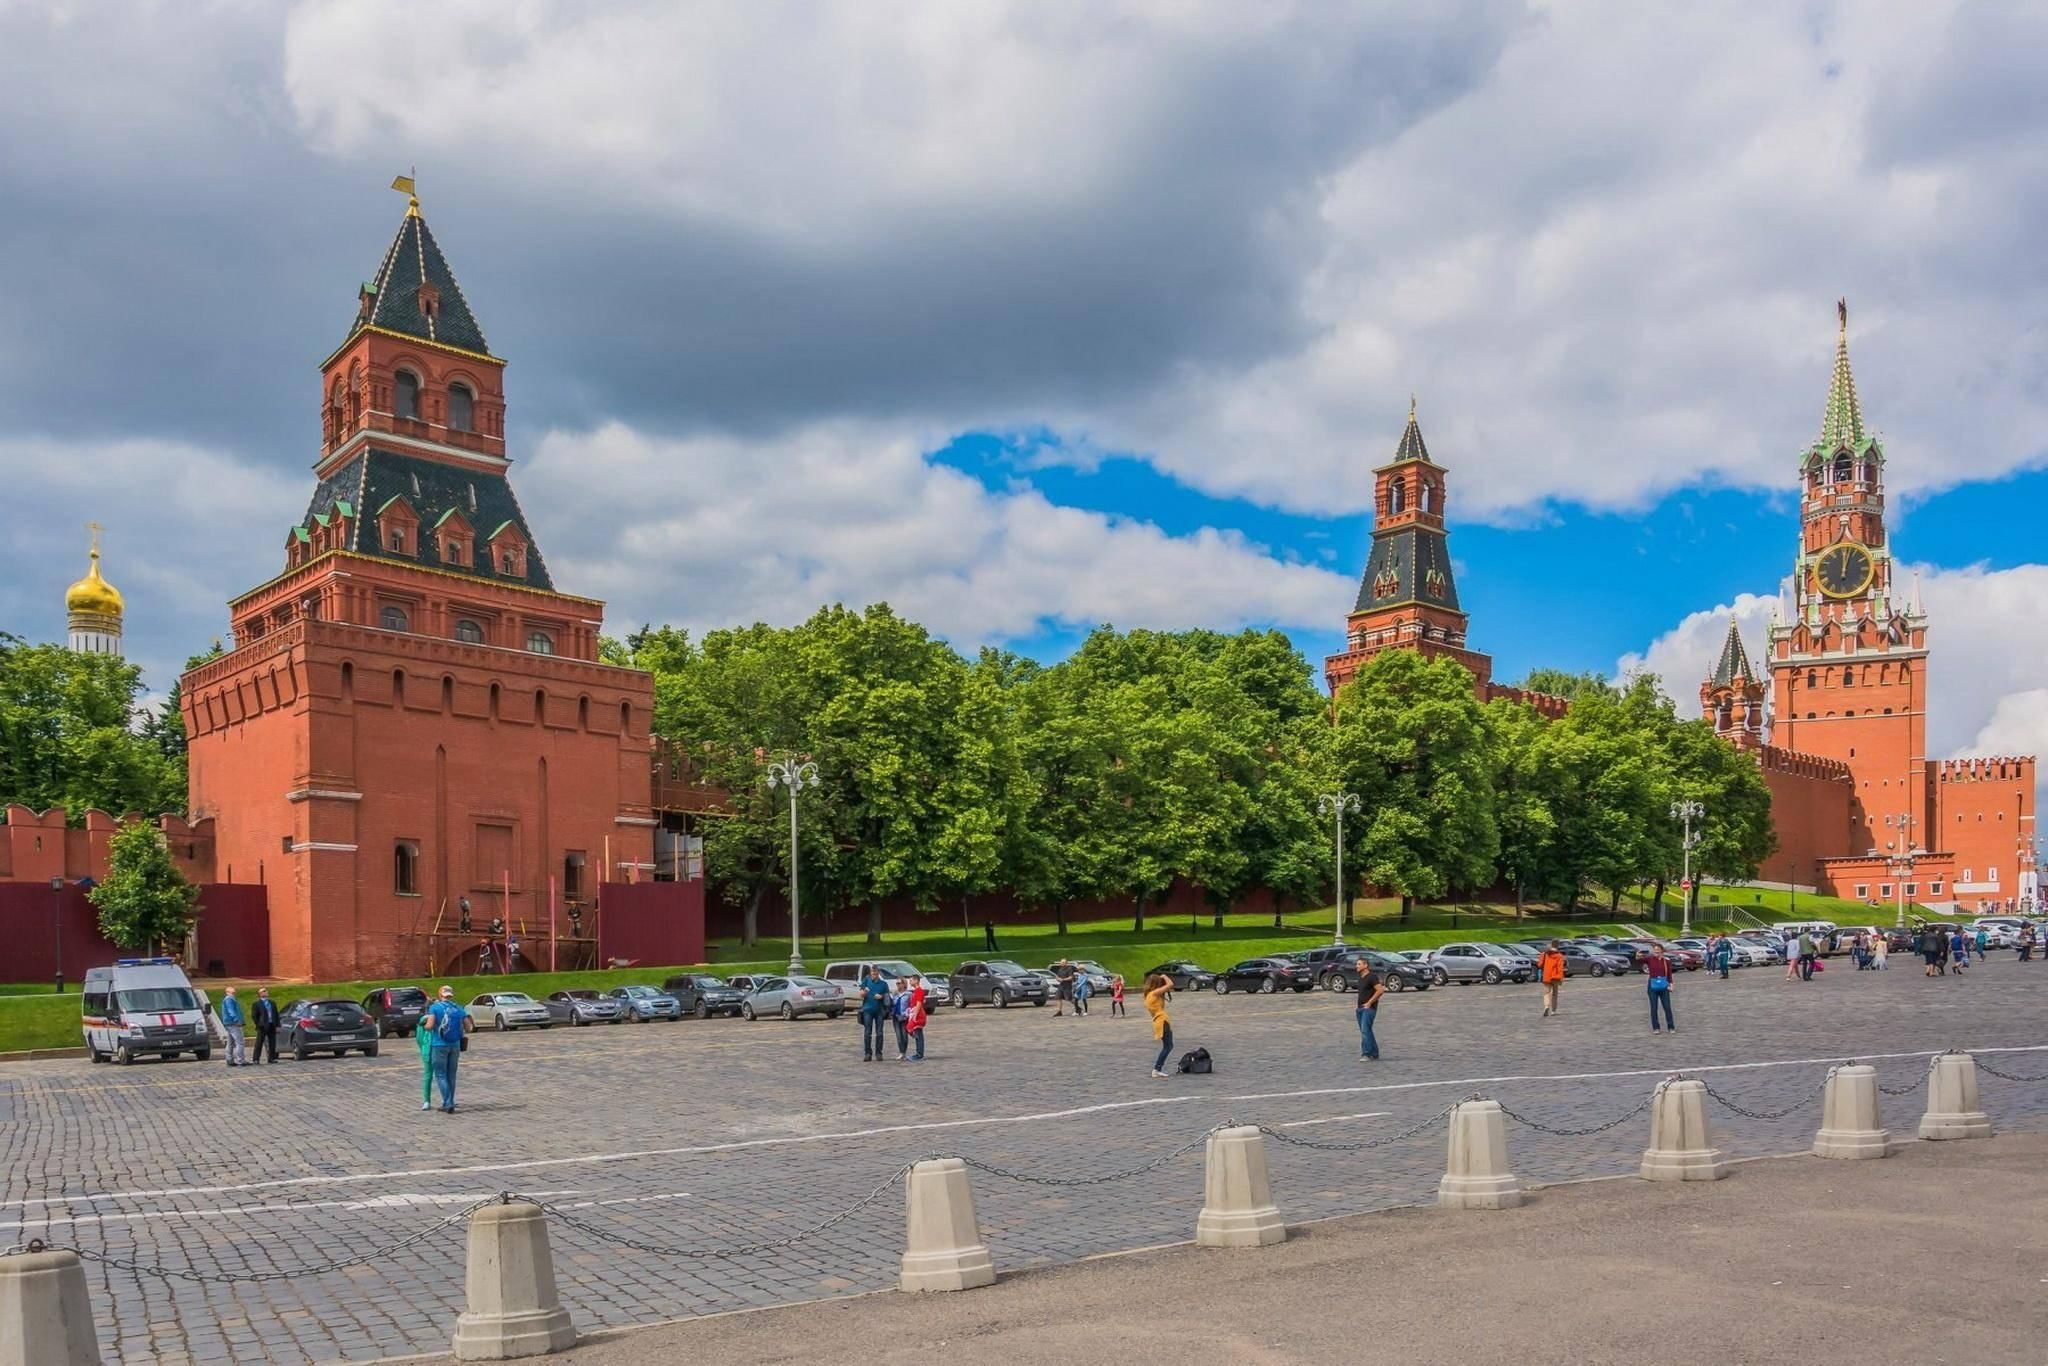 Цветная площадь. Кра́сная пло́щадь. Москва Red Square. Площадь красной площади в Москве. Фотографии красной площади в Москве.